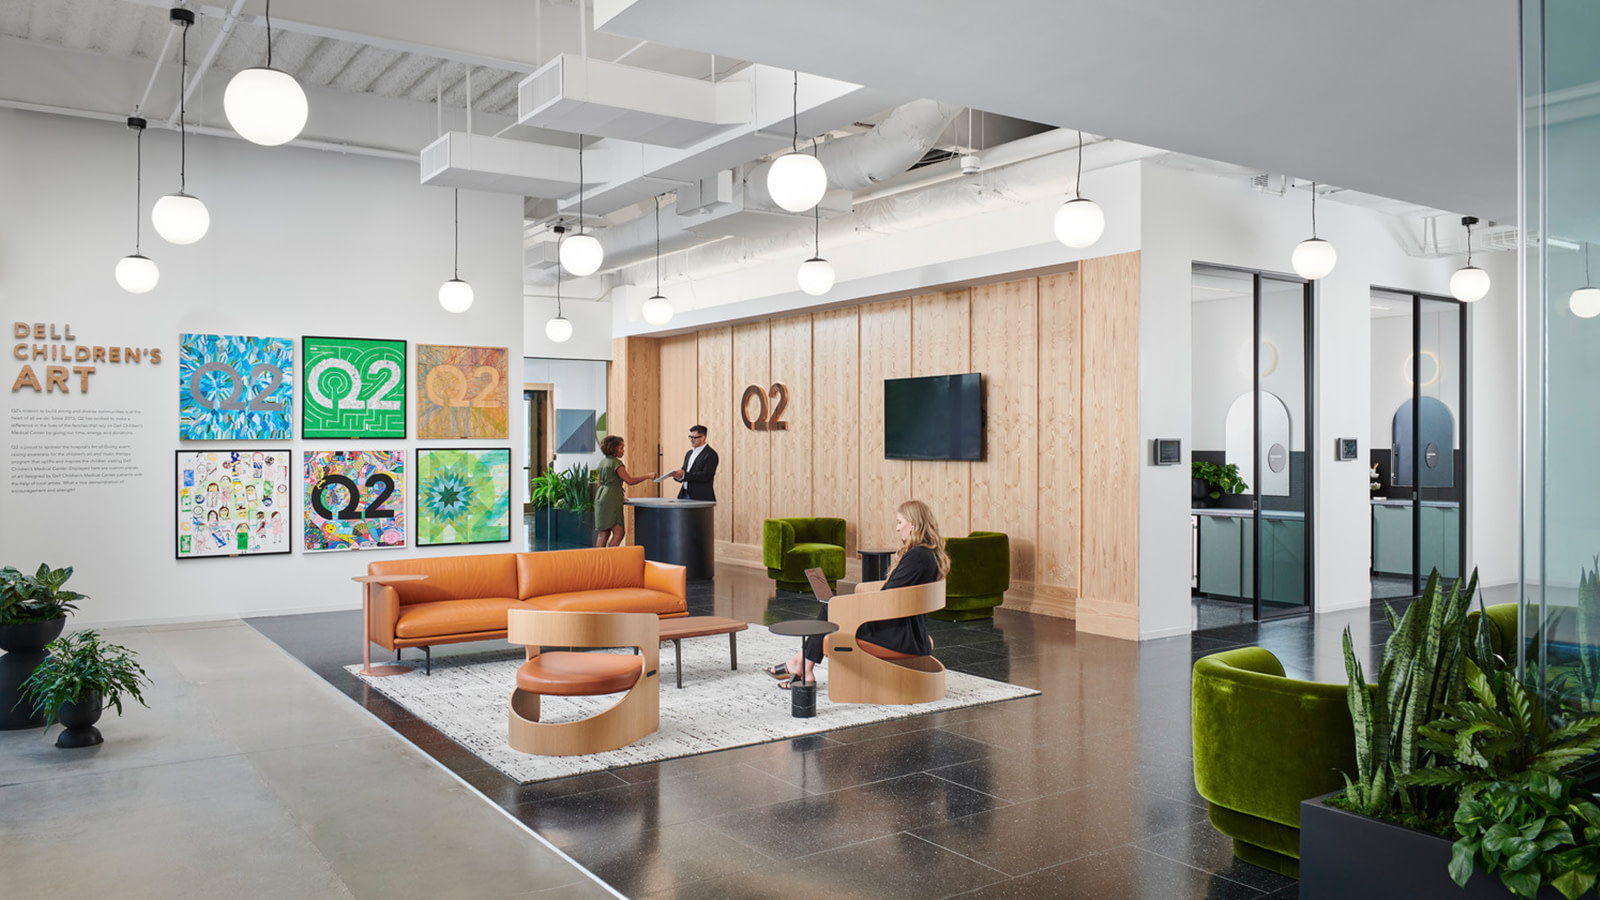 The reception area at Q2's Austin headquarters